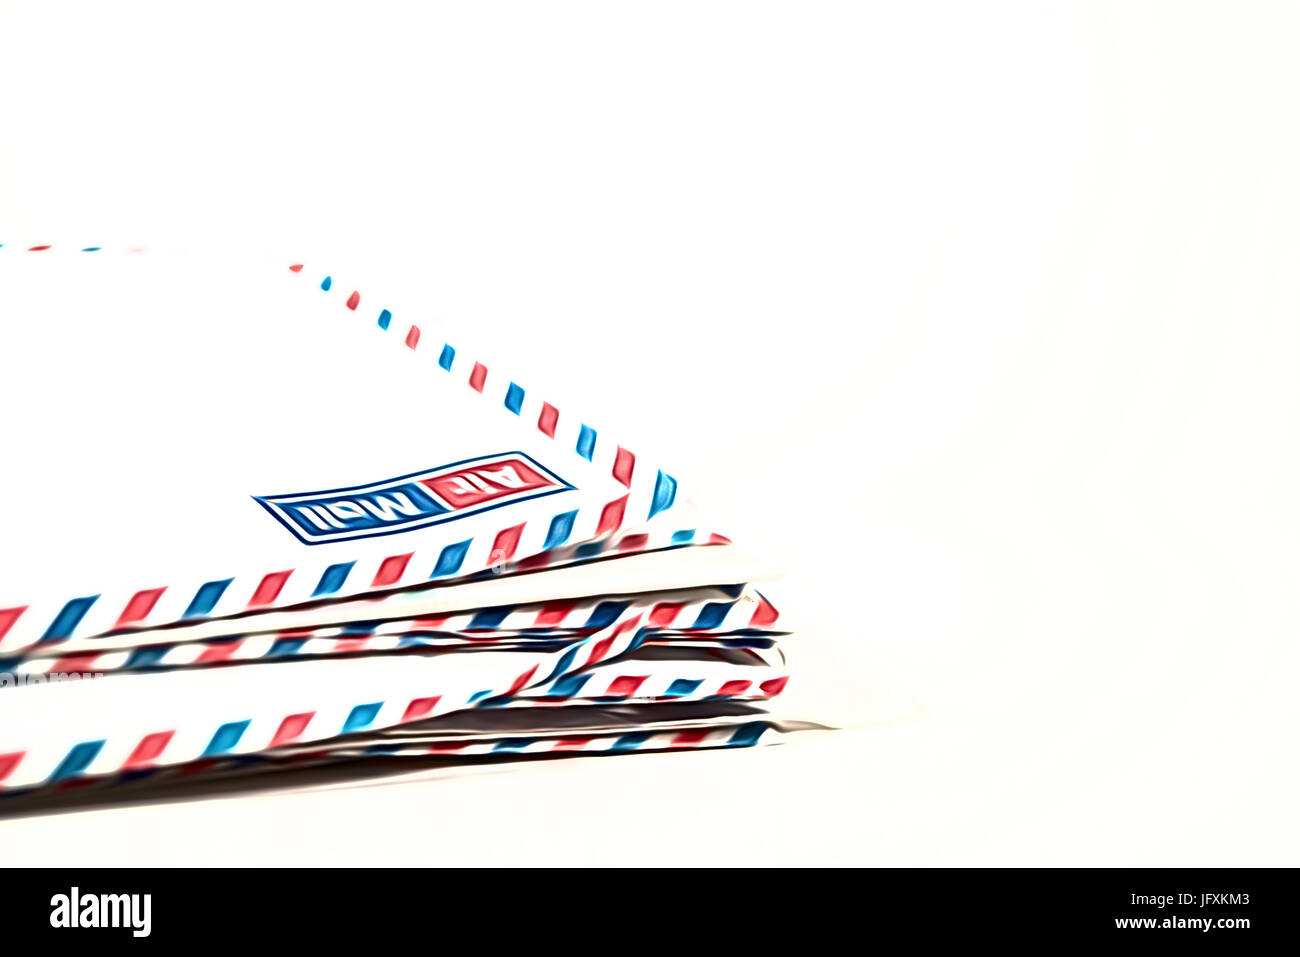 Airmail envelopes on white background. Stock Photo